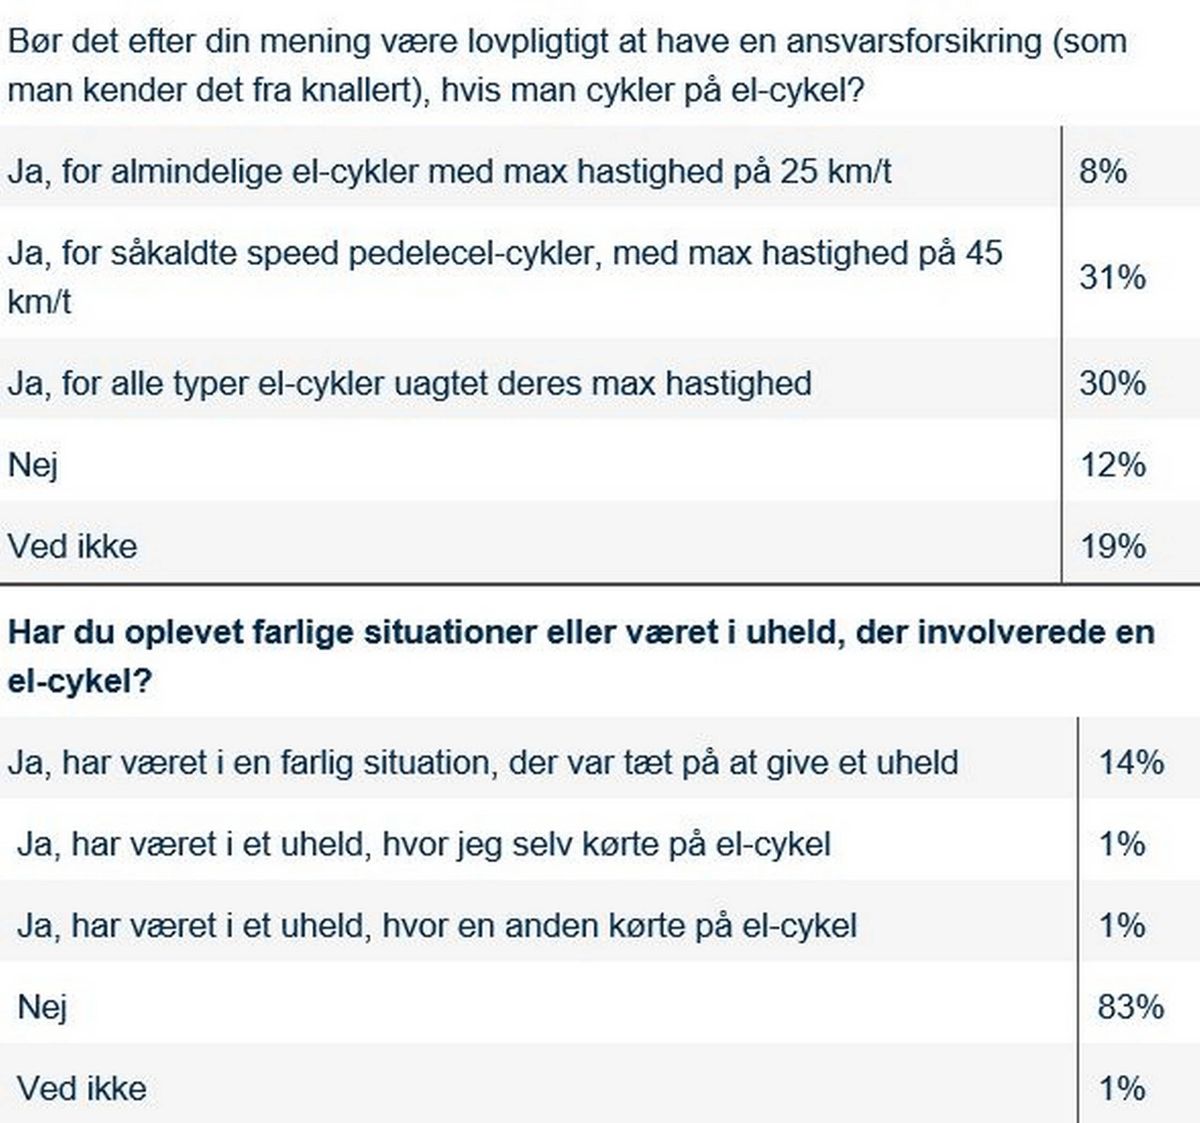 Stadig flere uheld med el-cykler: ønsker lovpligtig ansvarsforsikring